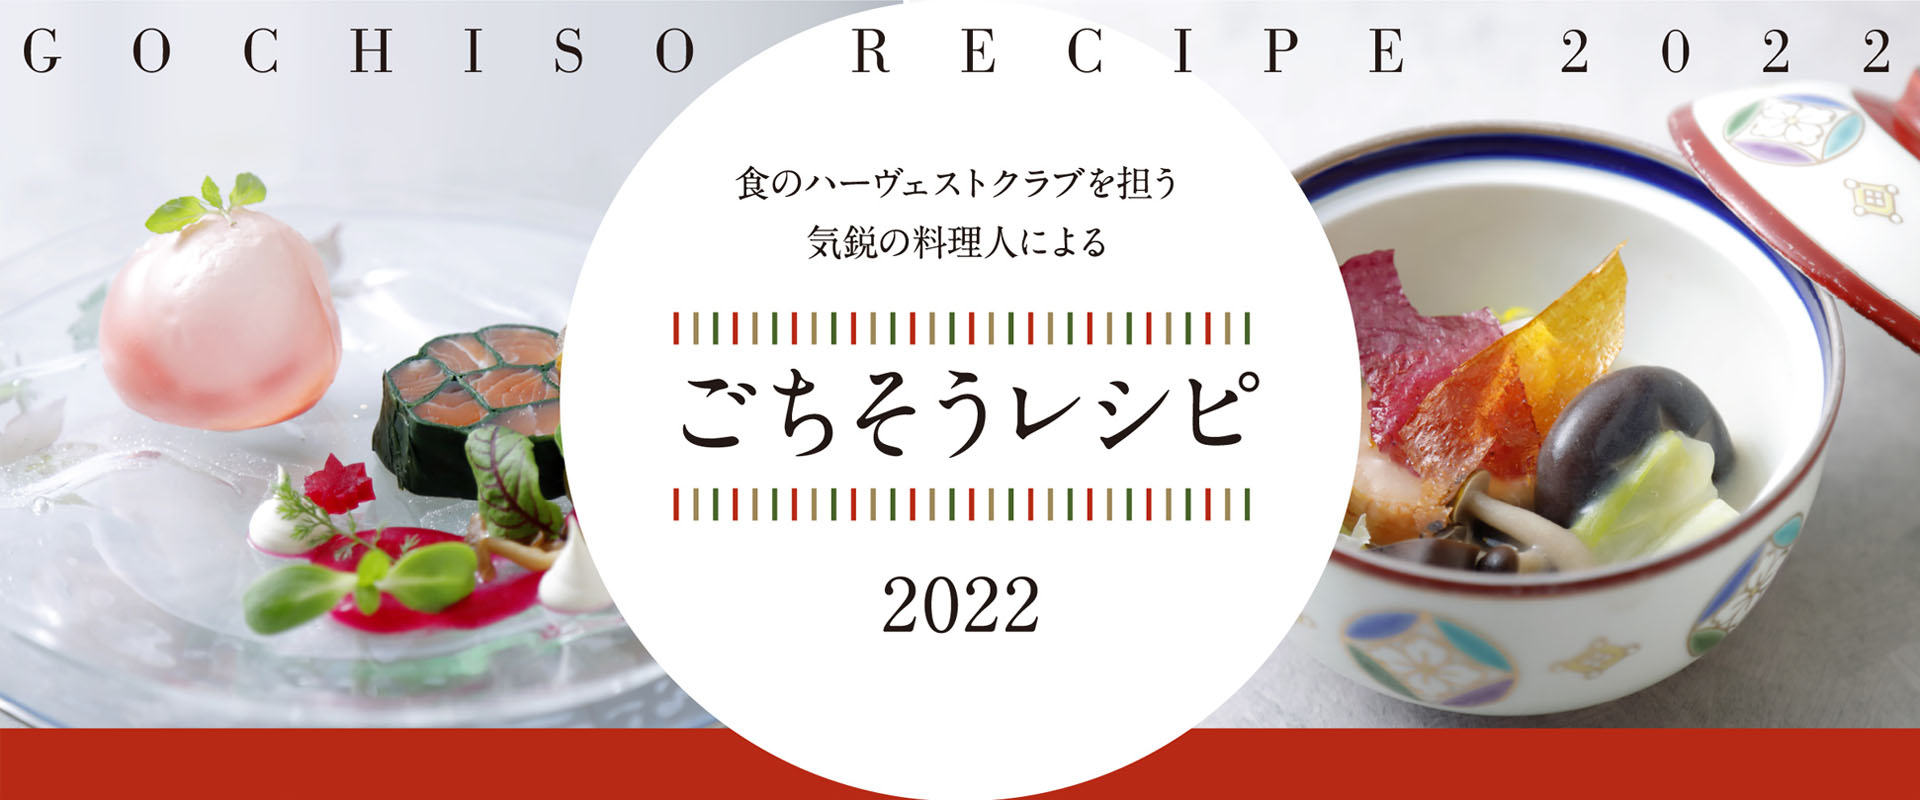 GOCHISO RECEPI 2022 食のハーヴェストクラブを担う気鋭の料理人による ごちそうレシピ2022